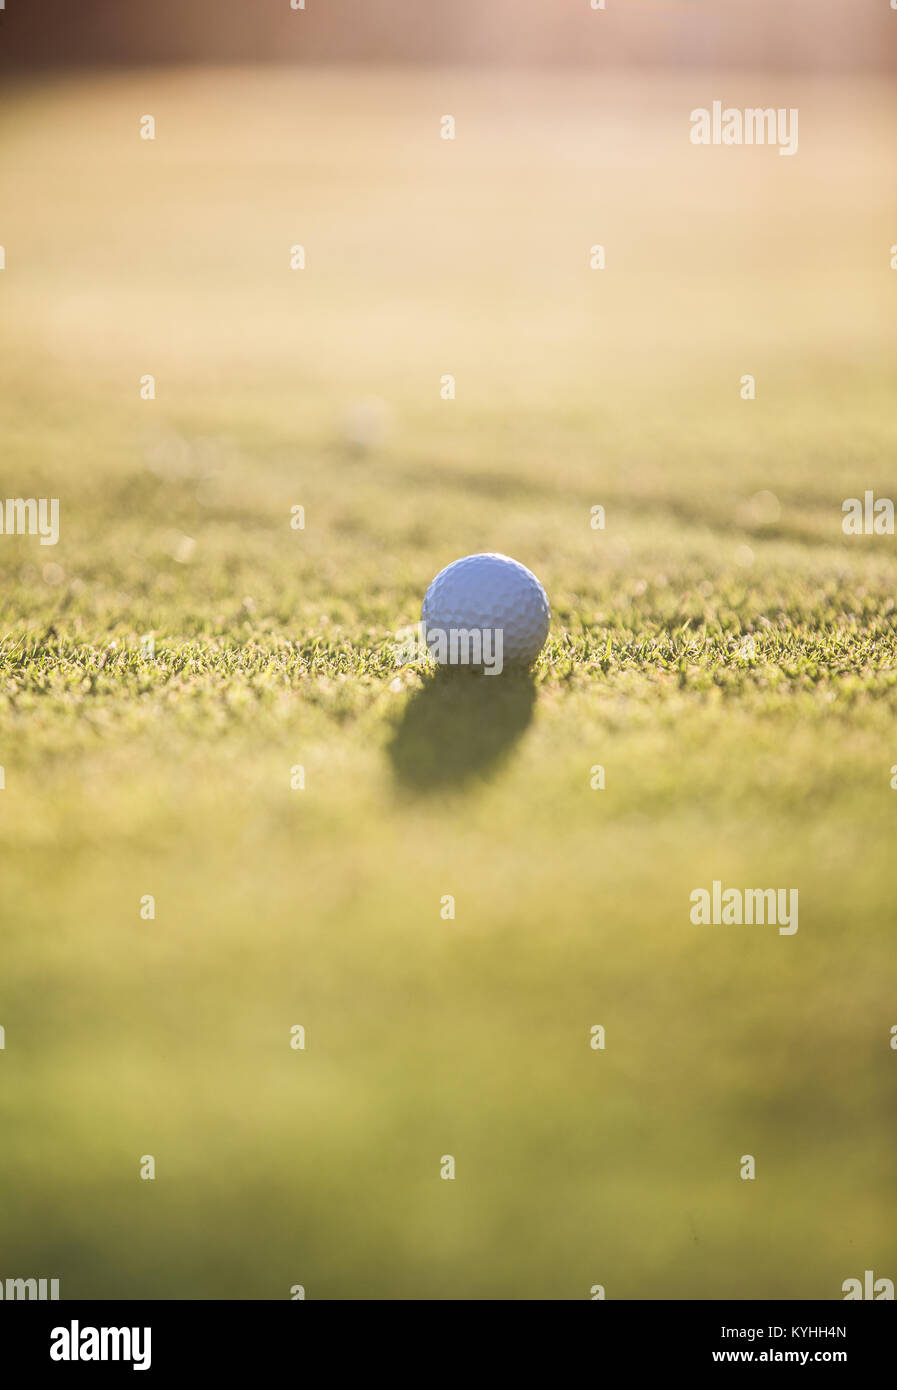 Golf ball on putting green Stock Photo